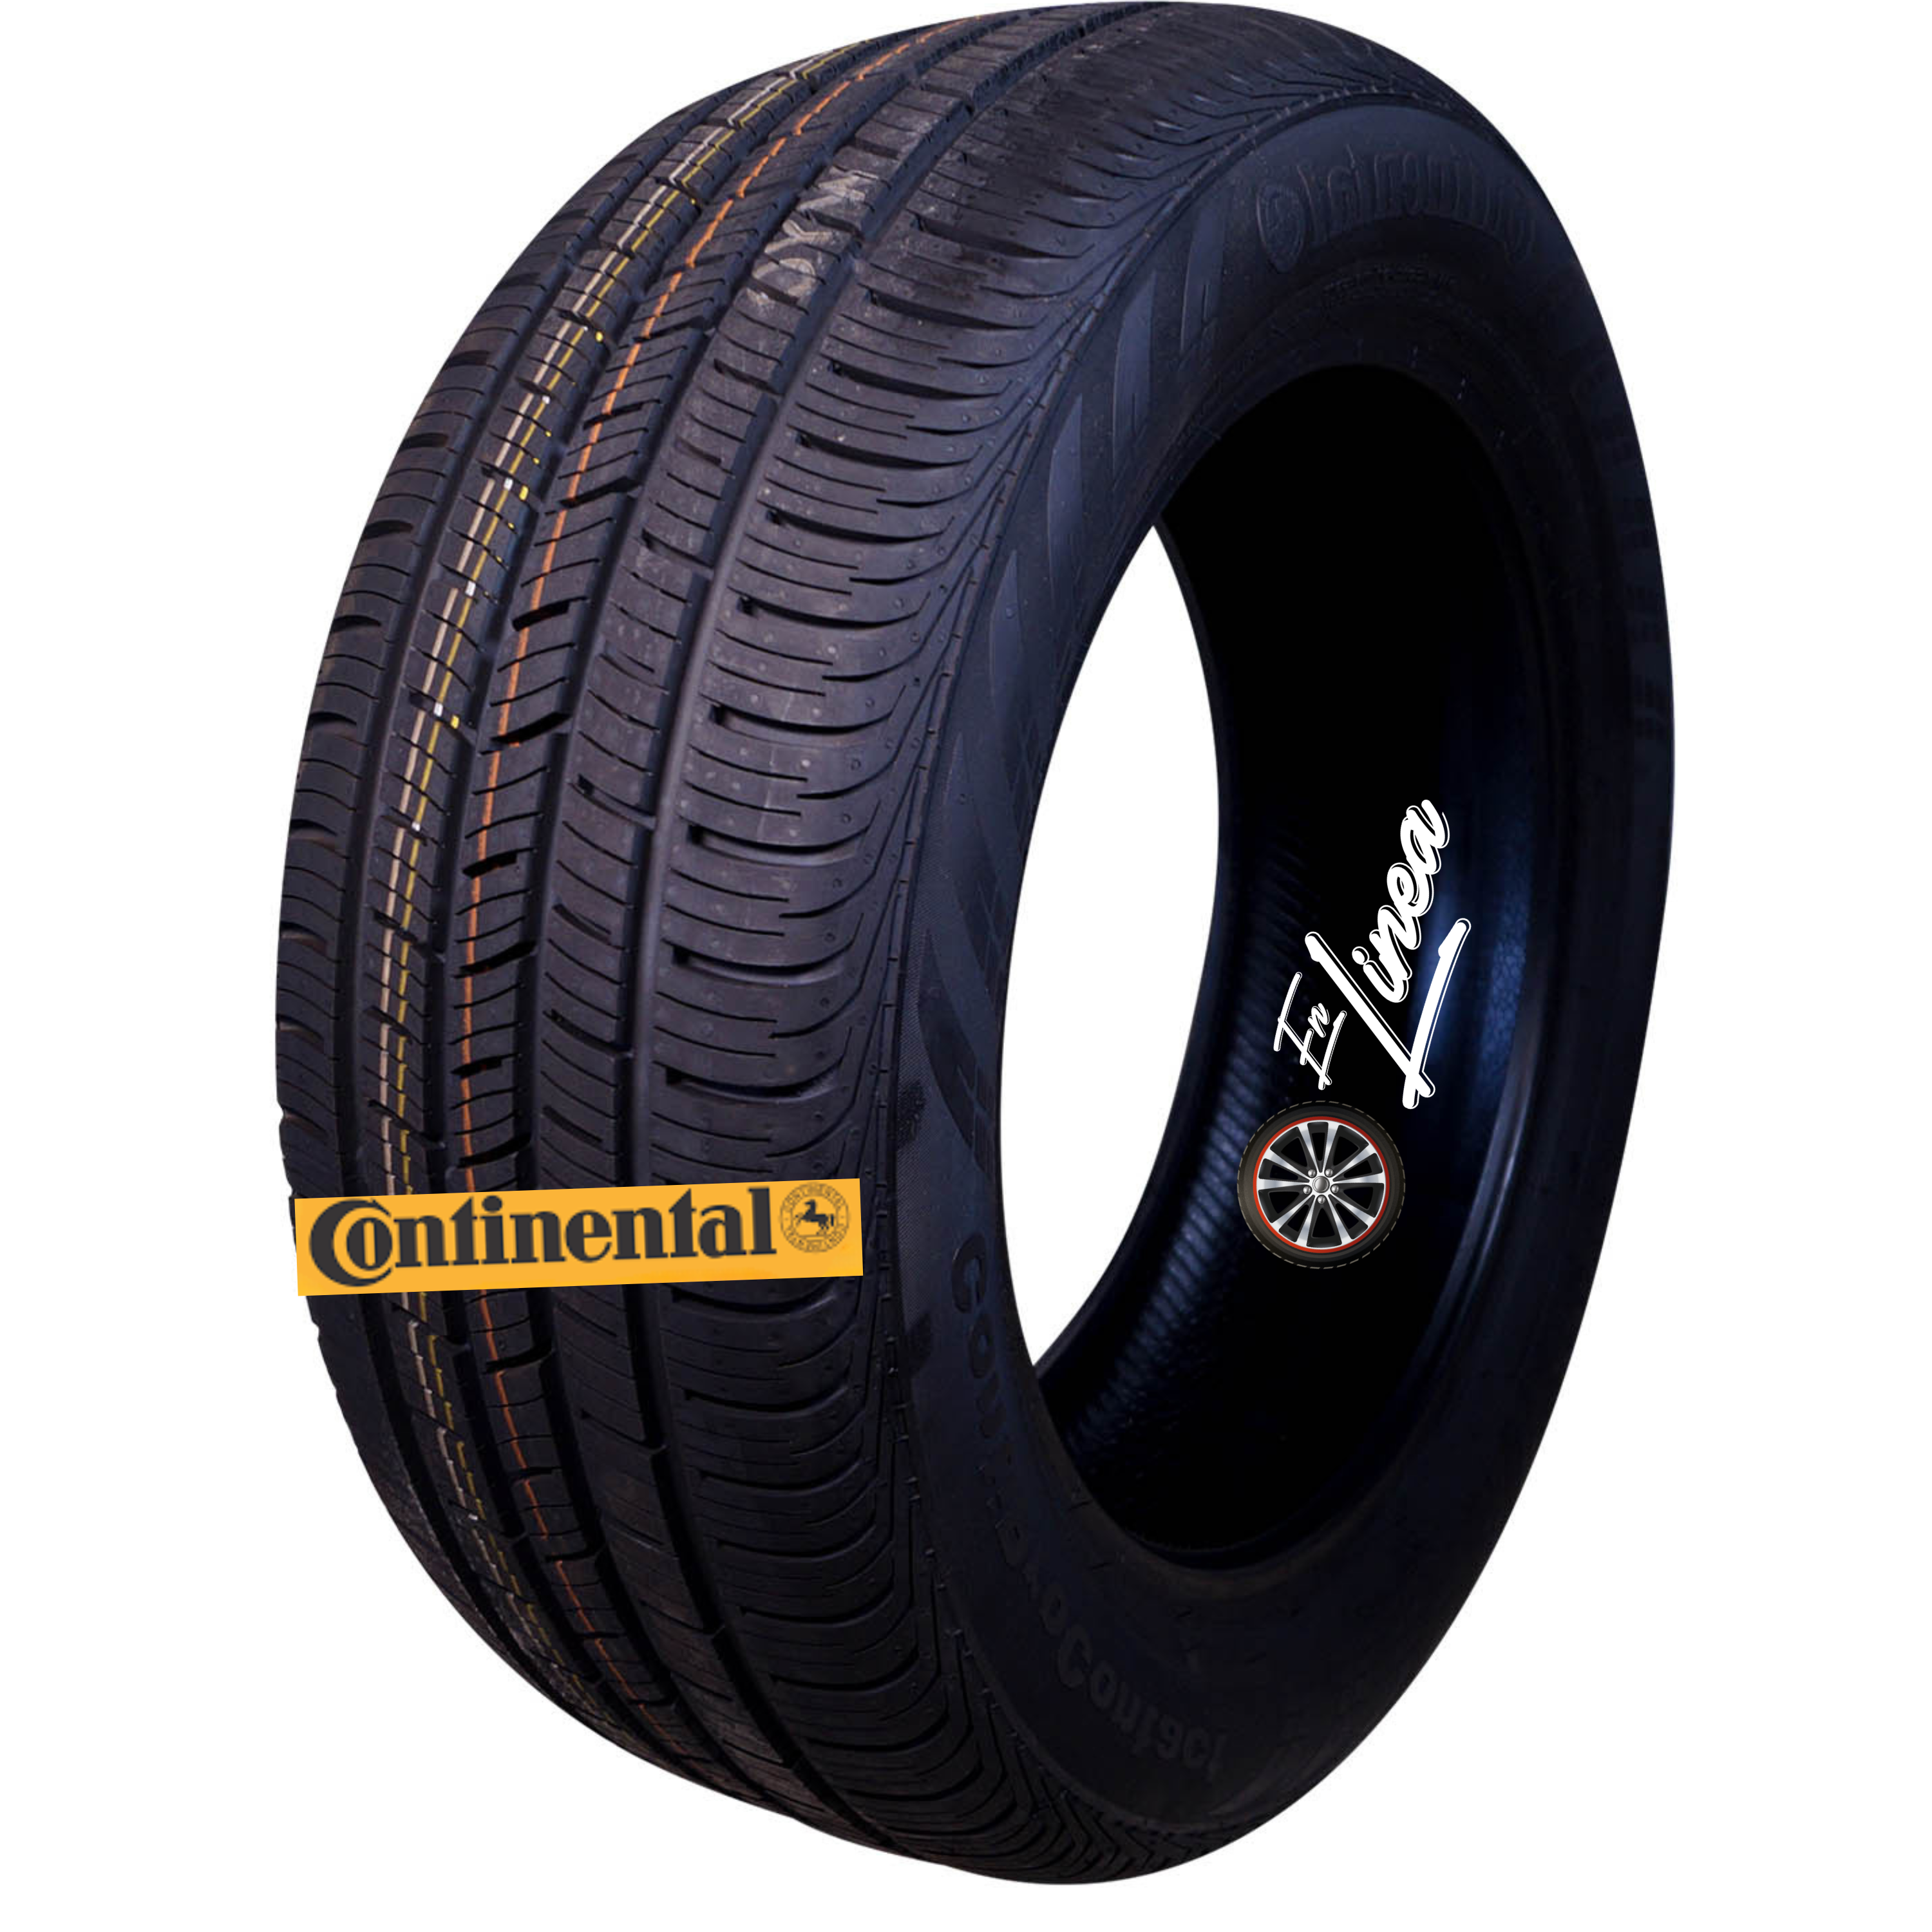 Neumático CONTINENTAL CONTIPREMIUMCONTACT 205/55 R16 91 V * Runflat